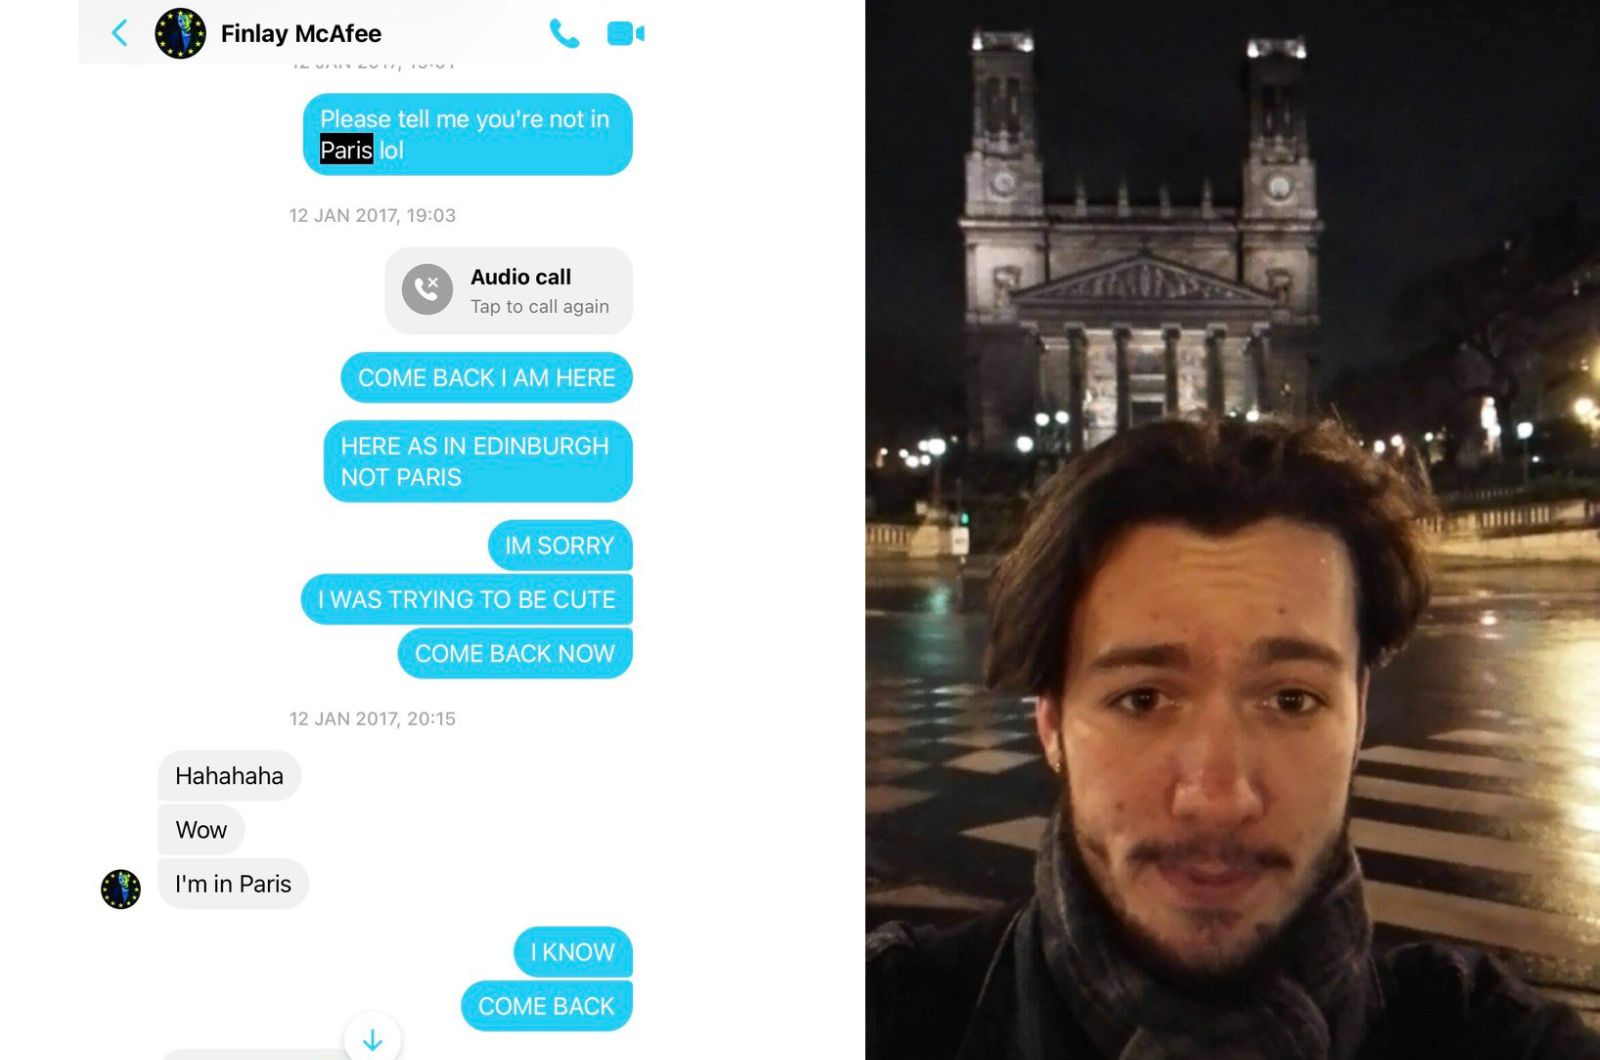 photo of man and conversation screenshot